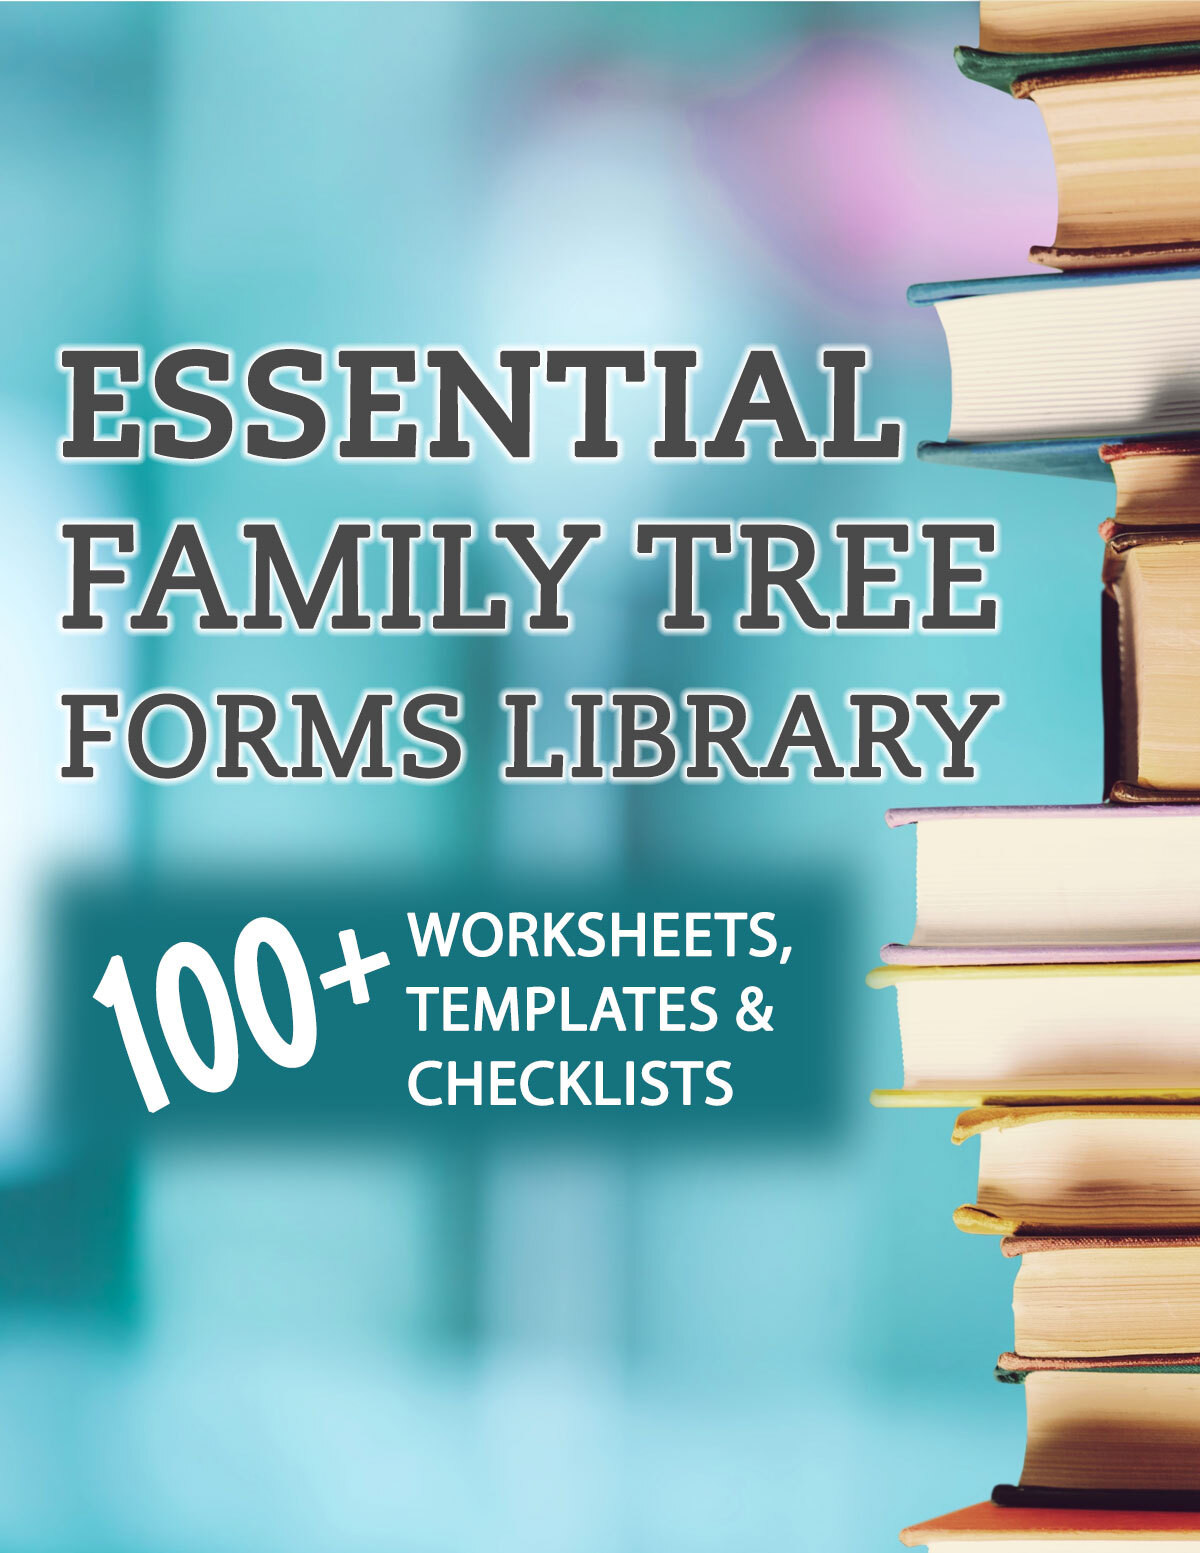 Genealogy Workbook Organizer: Family tree, Genealogical workbook with  charts and